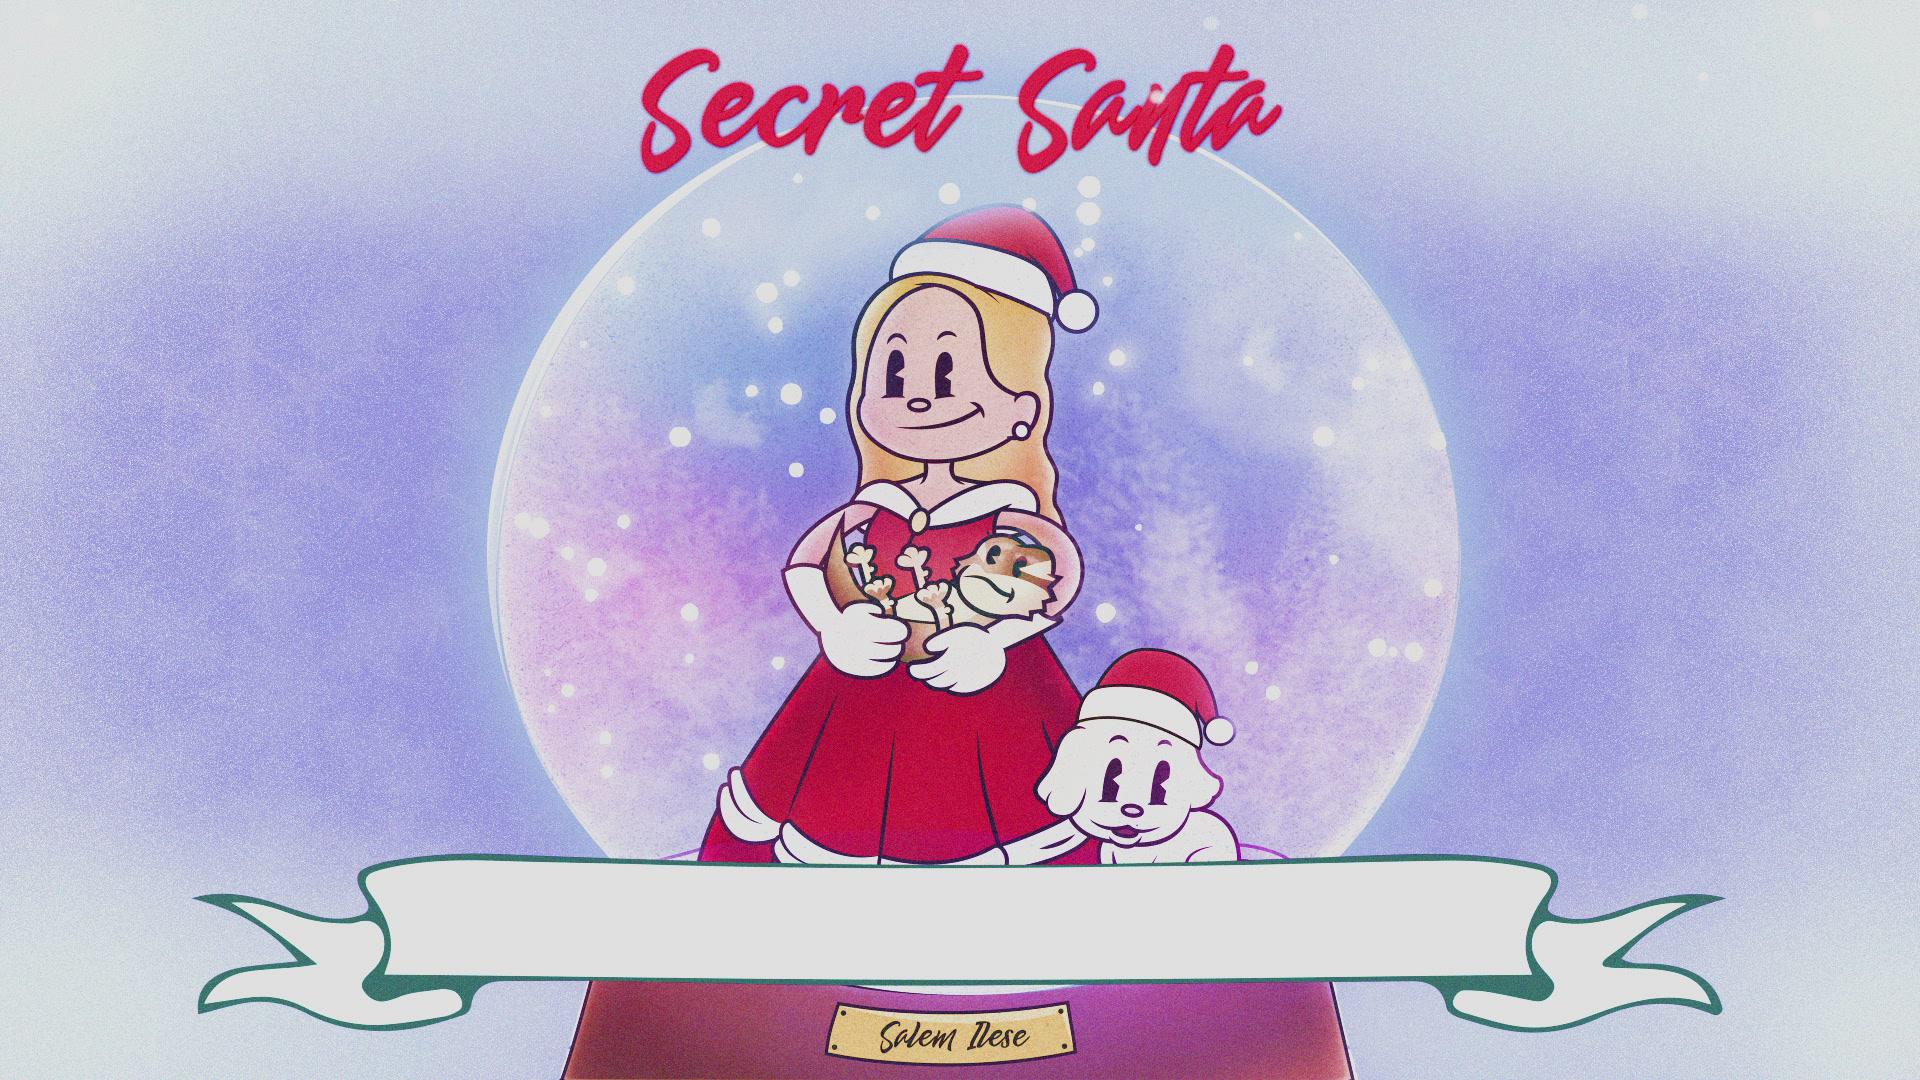 salem ilese - Secret Santa (Lyric Video)